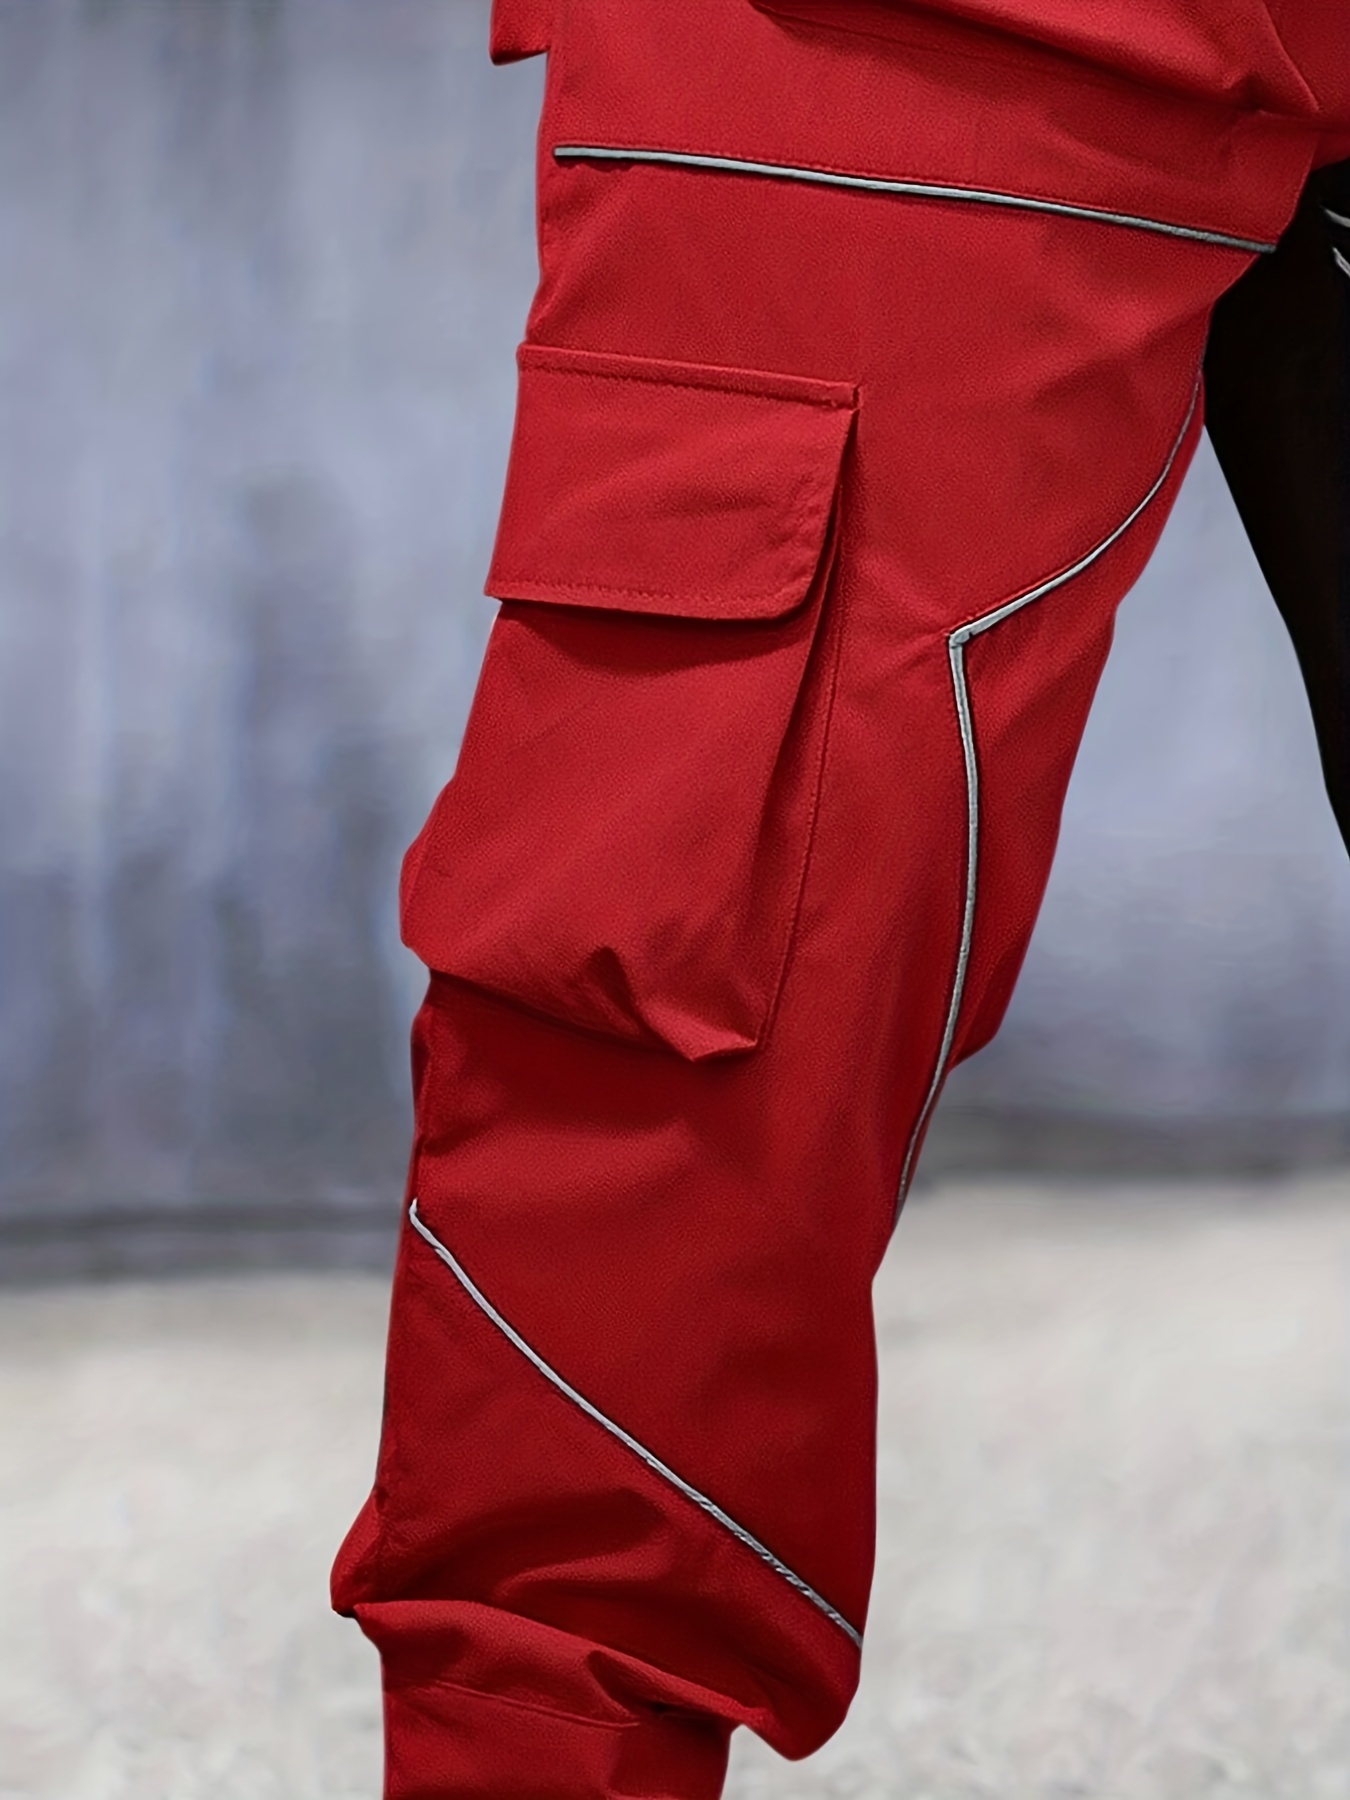 Men's Cargo Pants Japanese Style Pockets Jogger Trousers Color Block Pants  NEW 